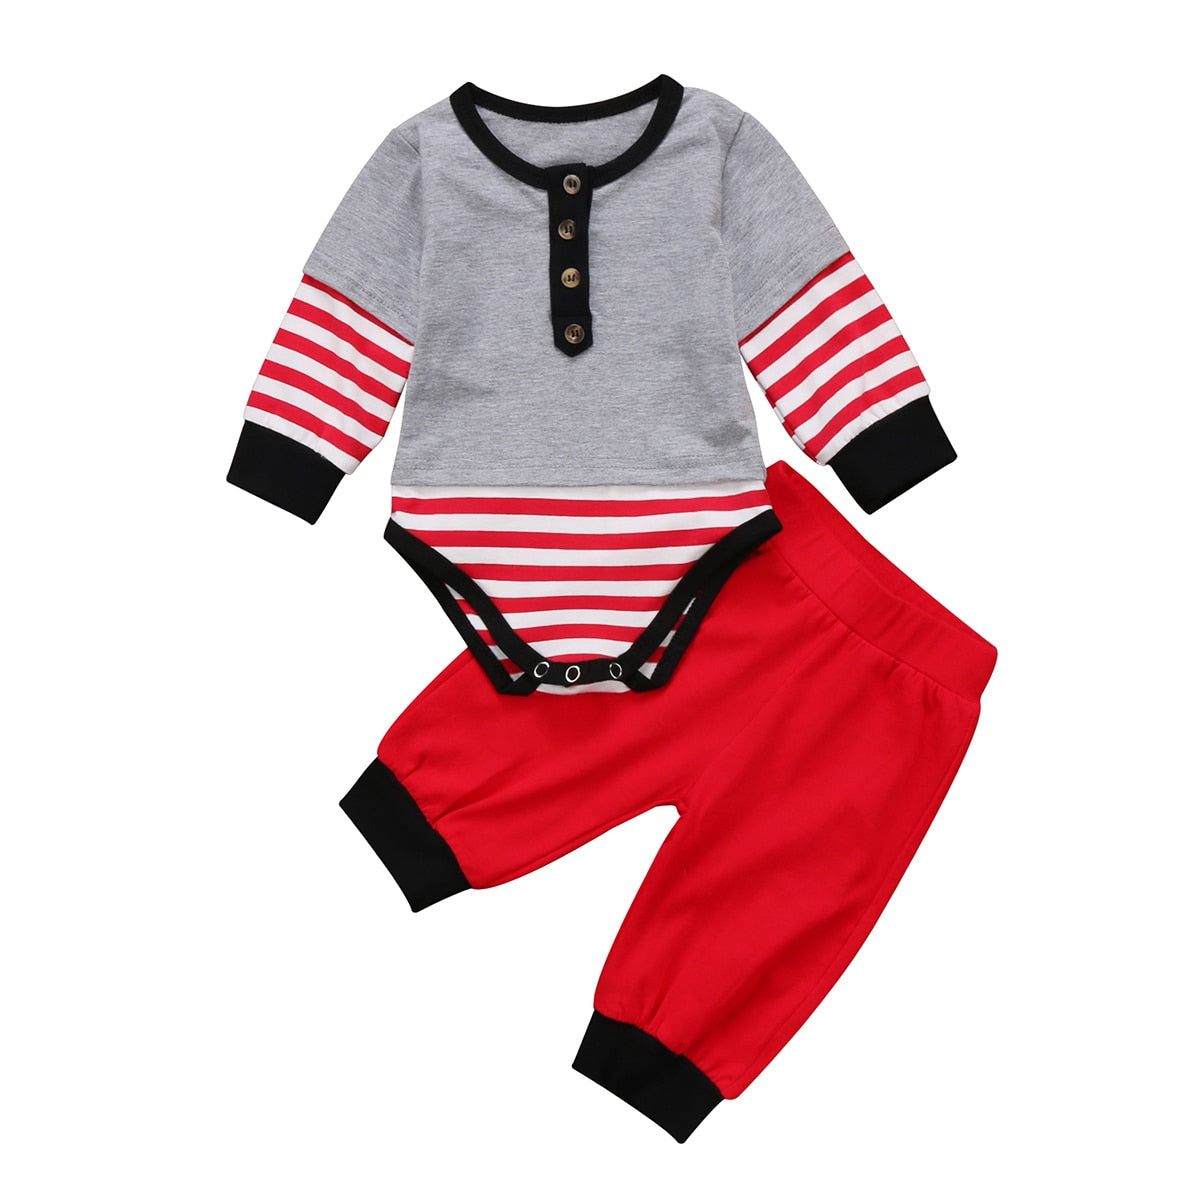 Winter Children Clothing Baby Boys Stripe Long Sleeve Cotton Top Romper Jumpsuit Pants Outfits Set Clothes - ebowsos